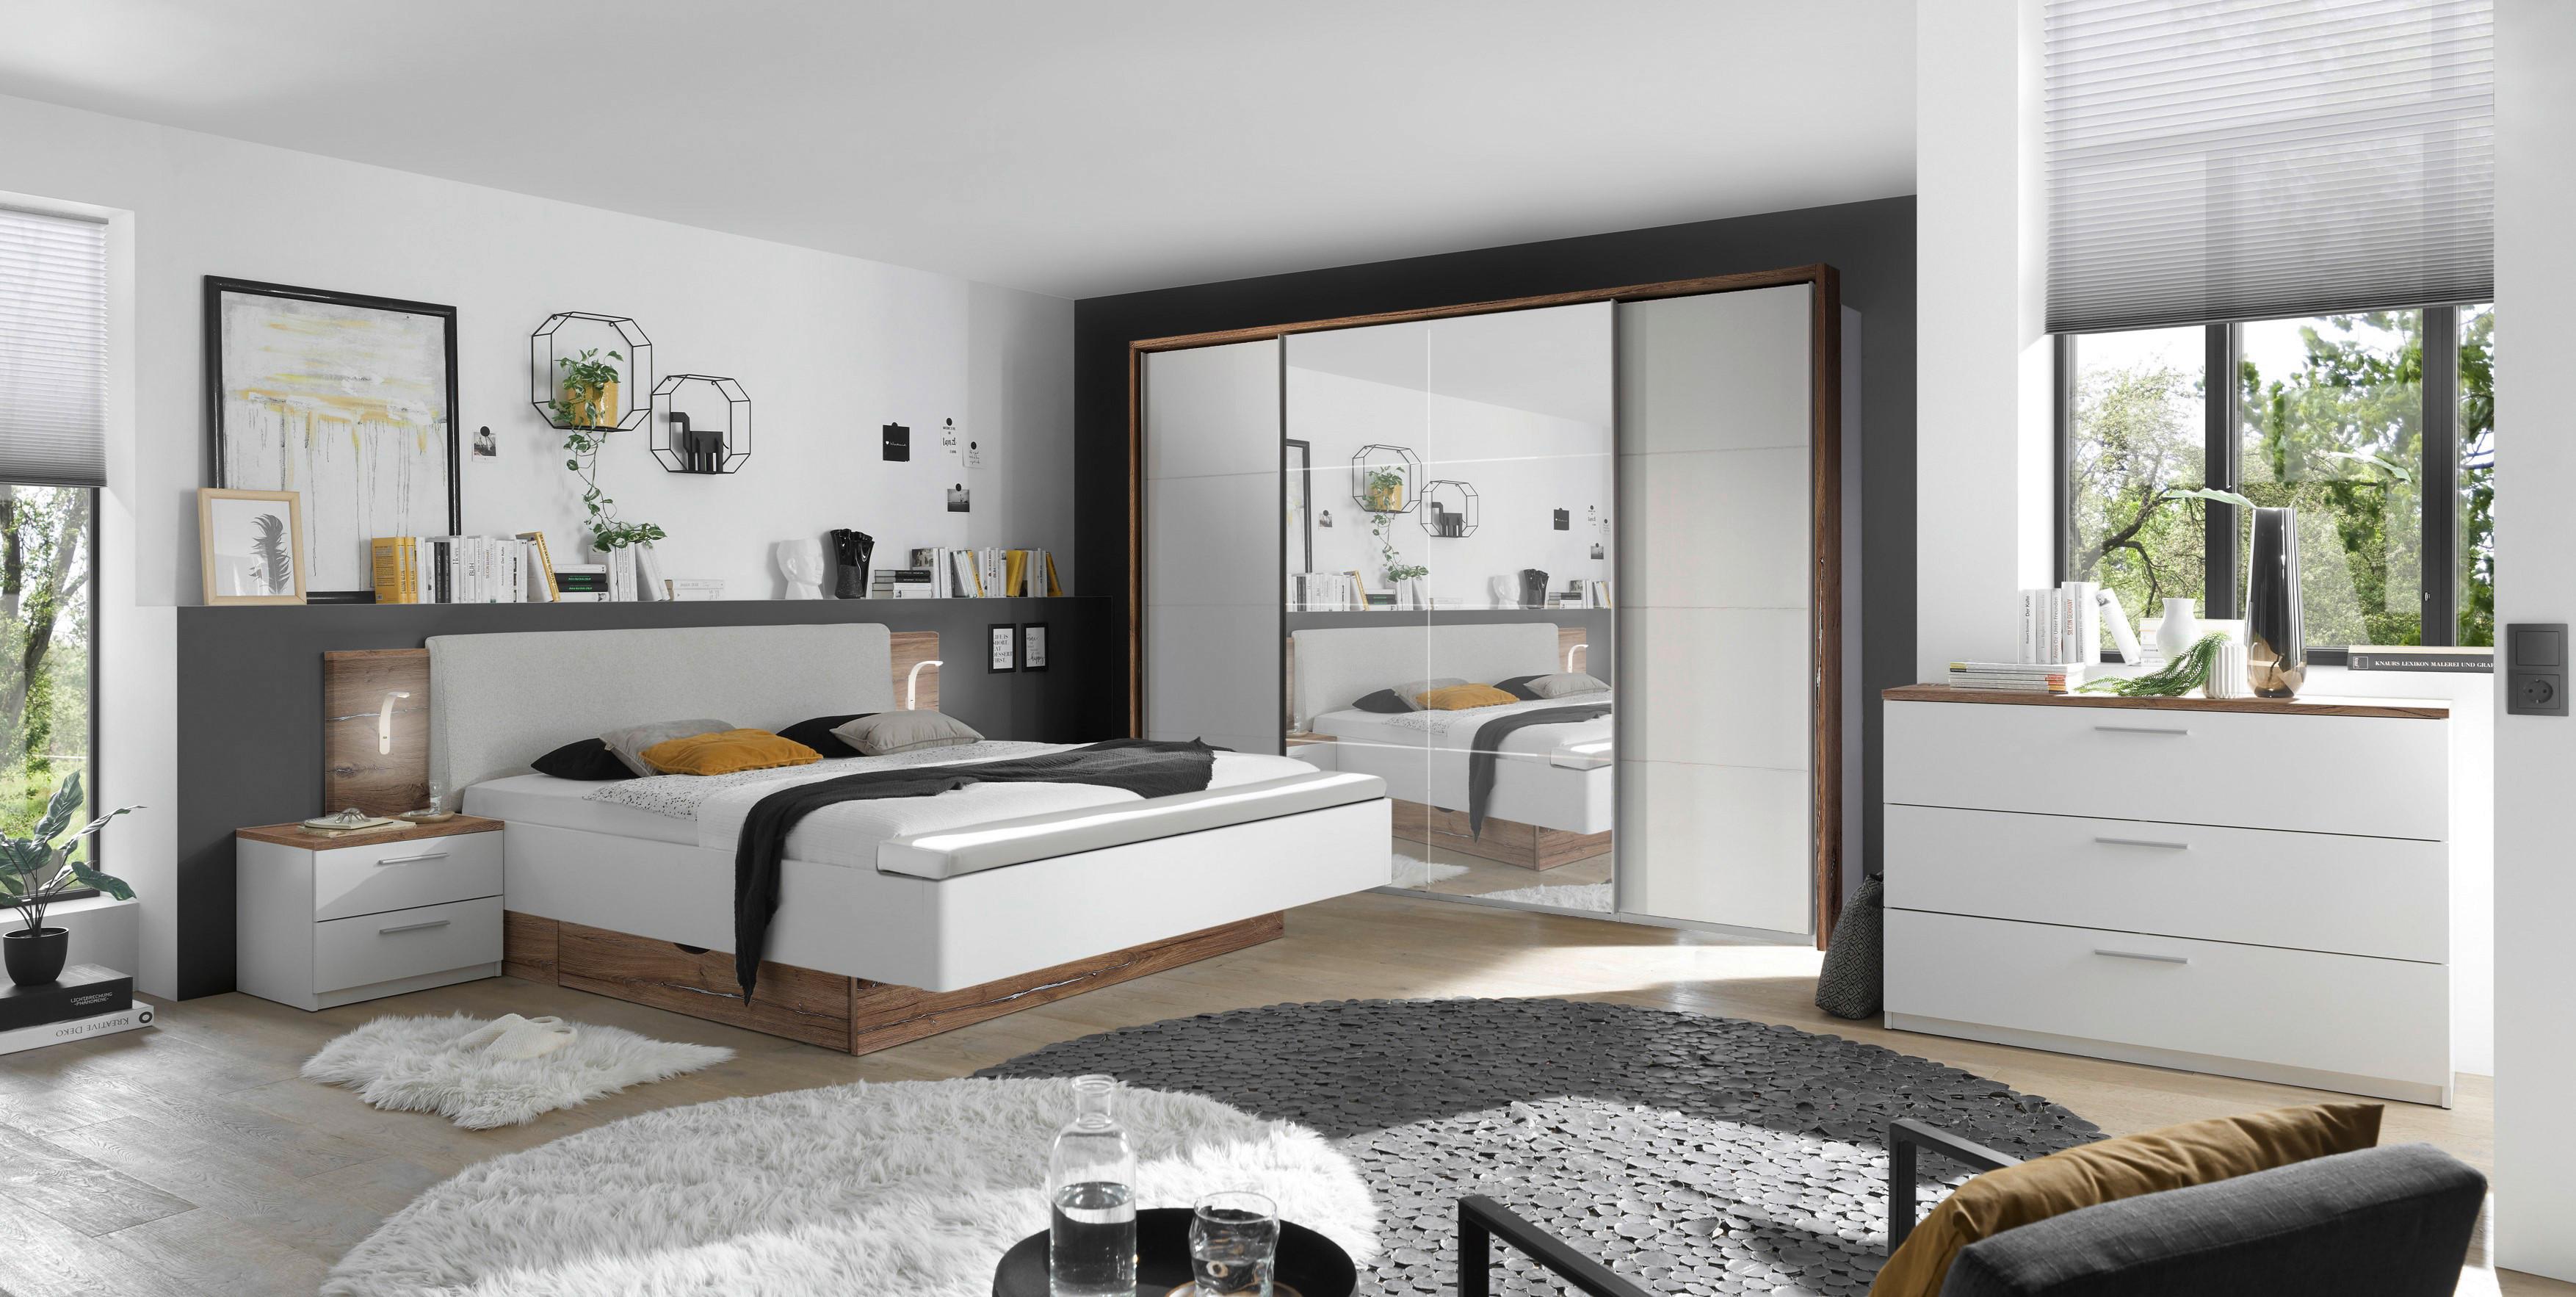 Dulap cu uși culisante Synchro-3-Top - alb, Konventionell, material pe bază de lemn (270/226/60cm) - Premium Living